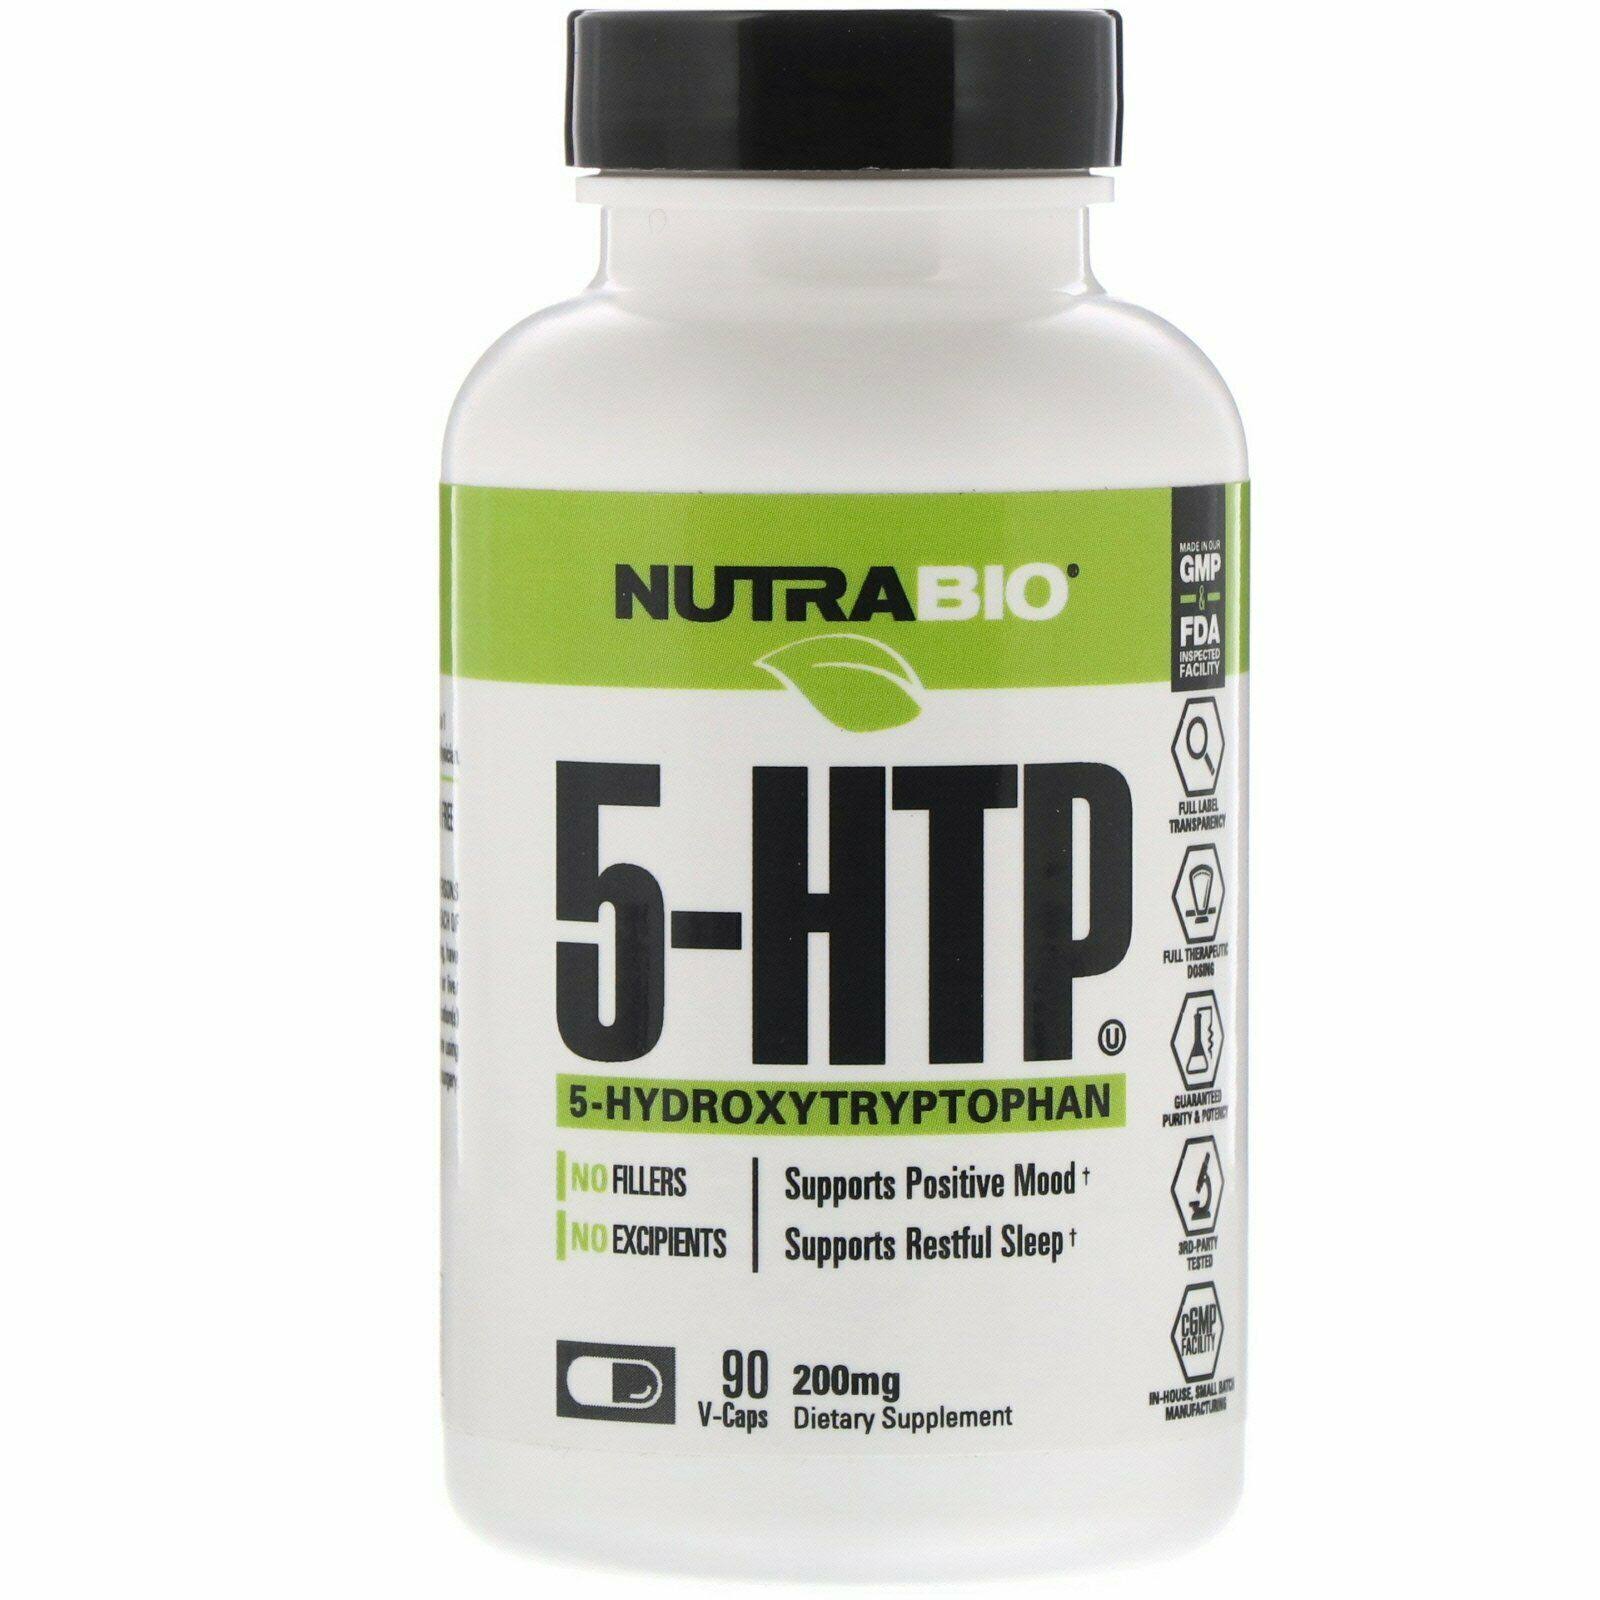 NutraBio 5-HTP Supplement (200mg, 90 Vegetable Capsules)